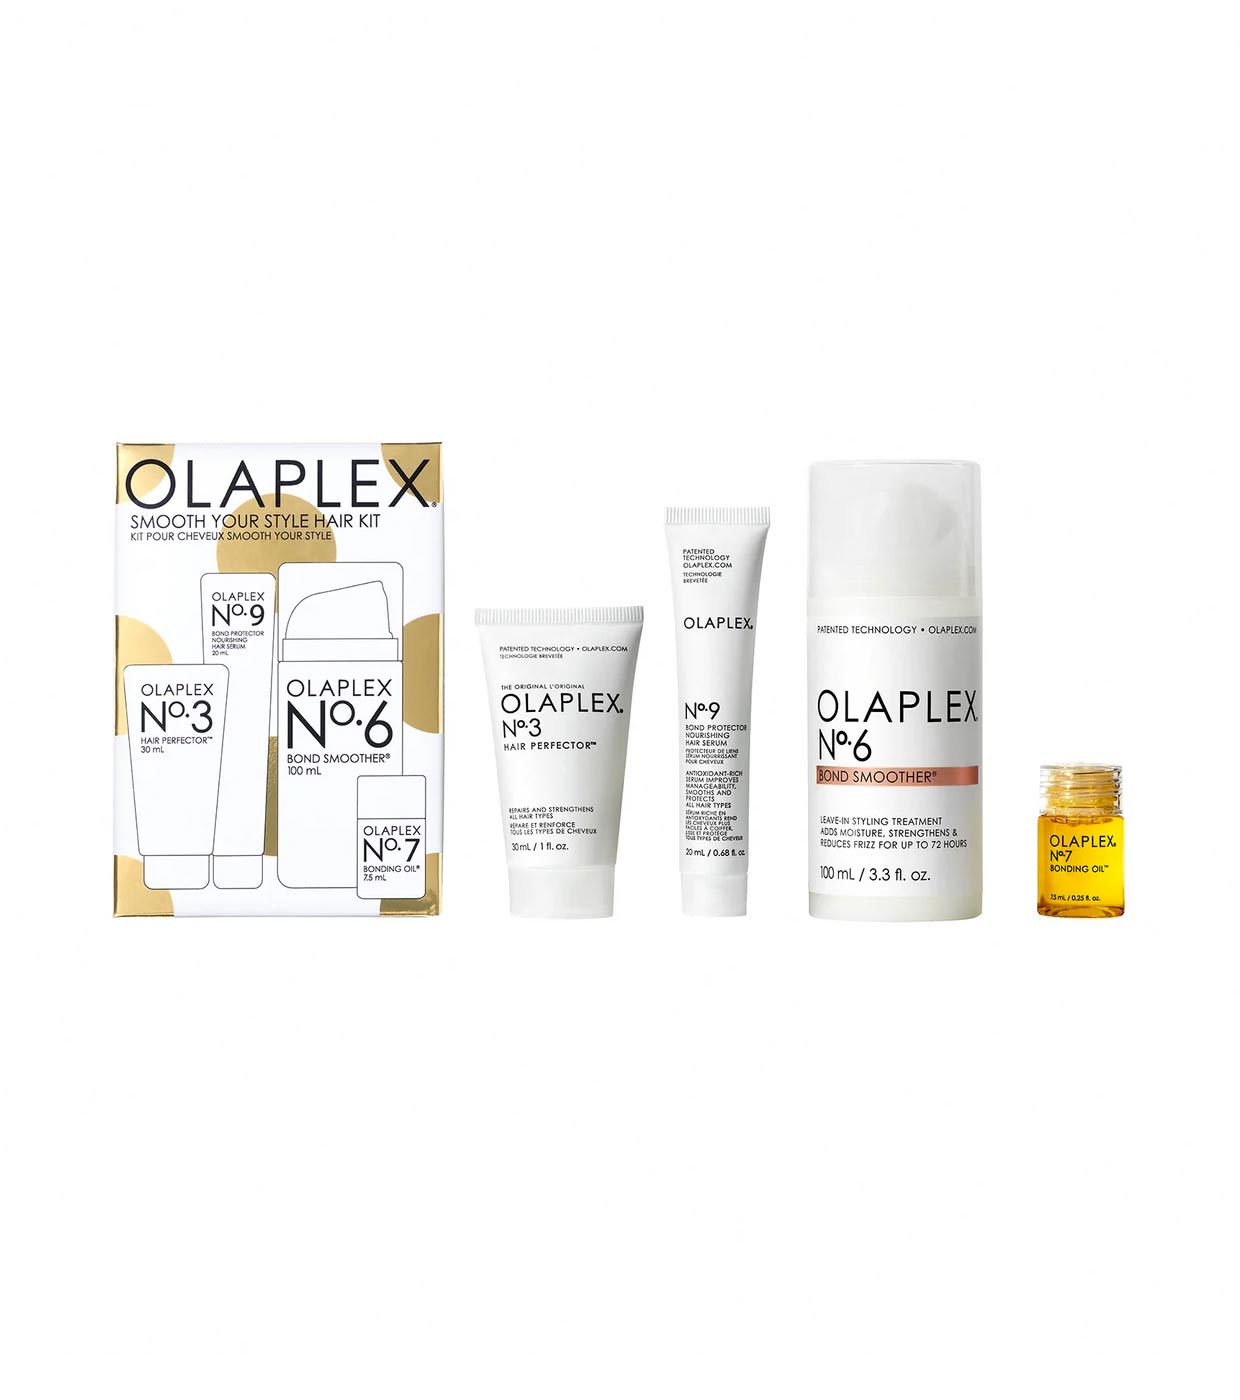 olaplex-set-smooth-your-style-hair-kit-1-79107